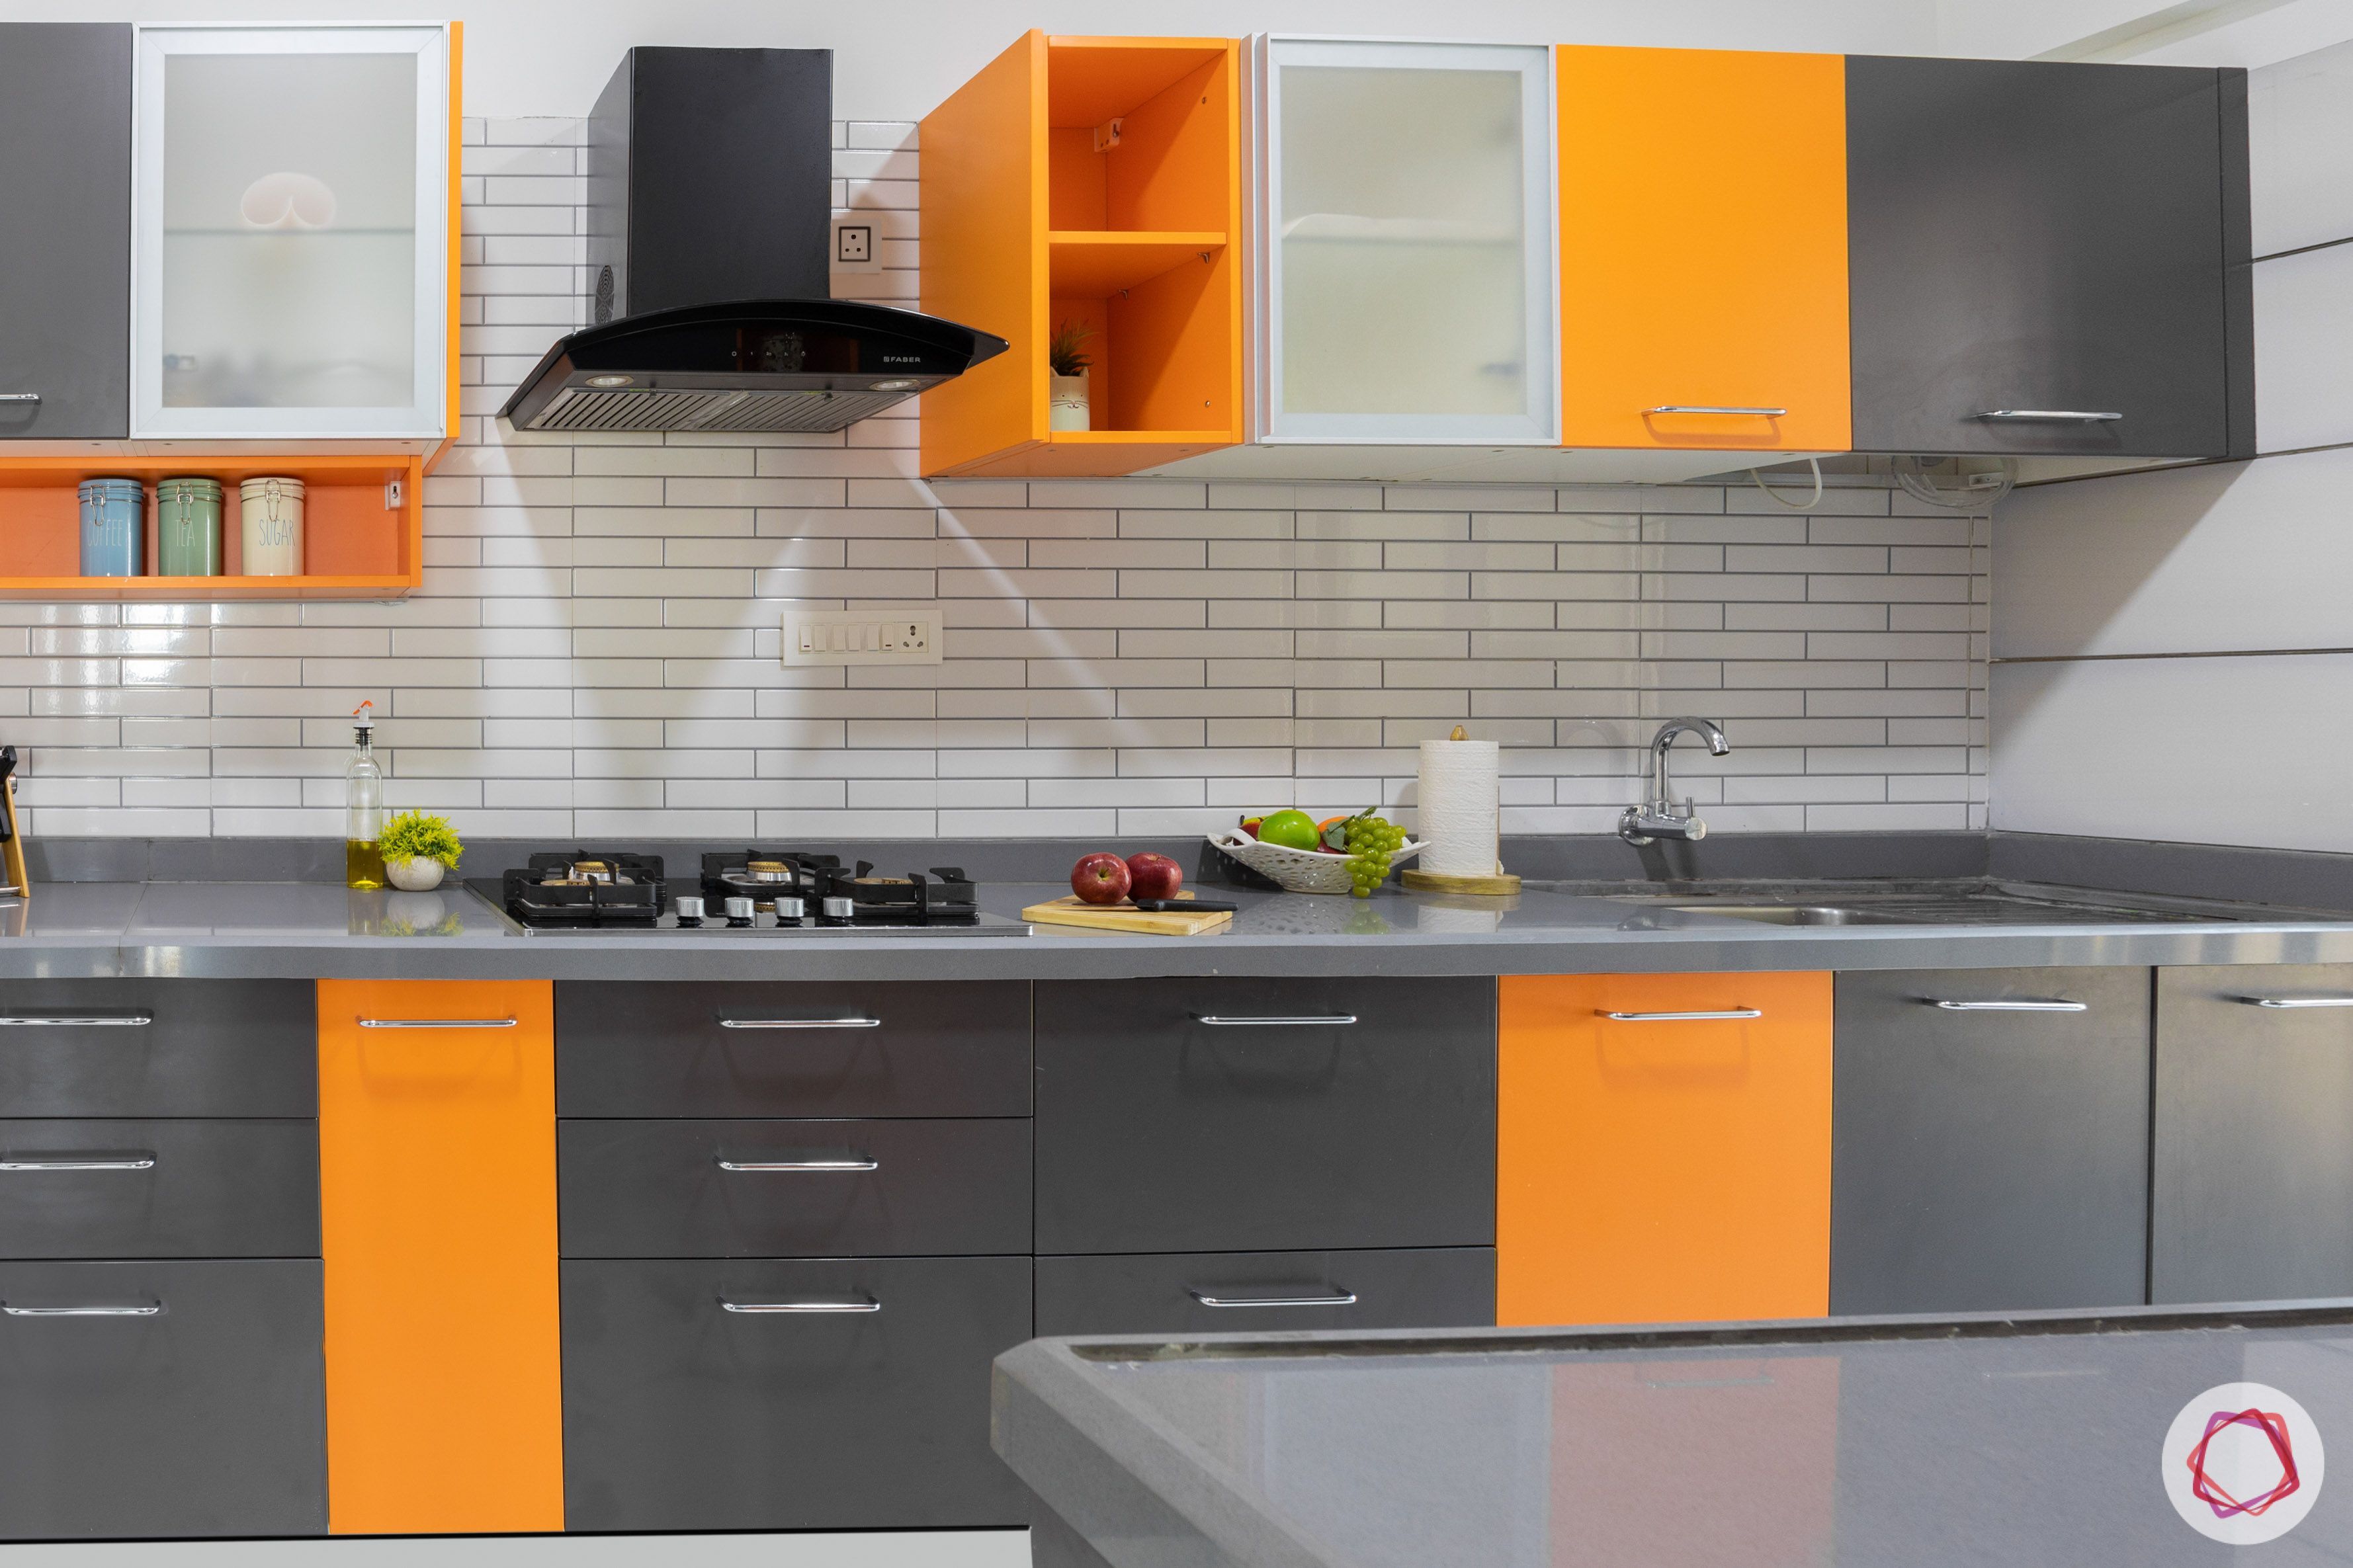 livspace mumbai-3-bhk-in-mumbai-orange cabinets-grey cabinets-rubic kitchen-laminate kitchen